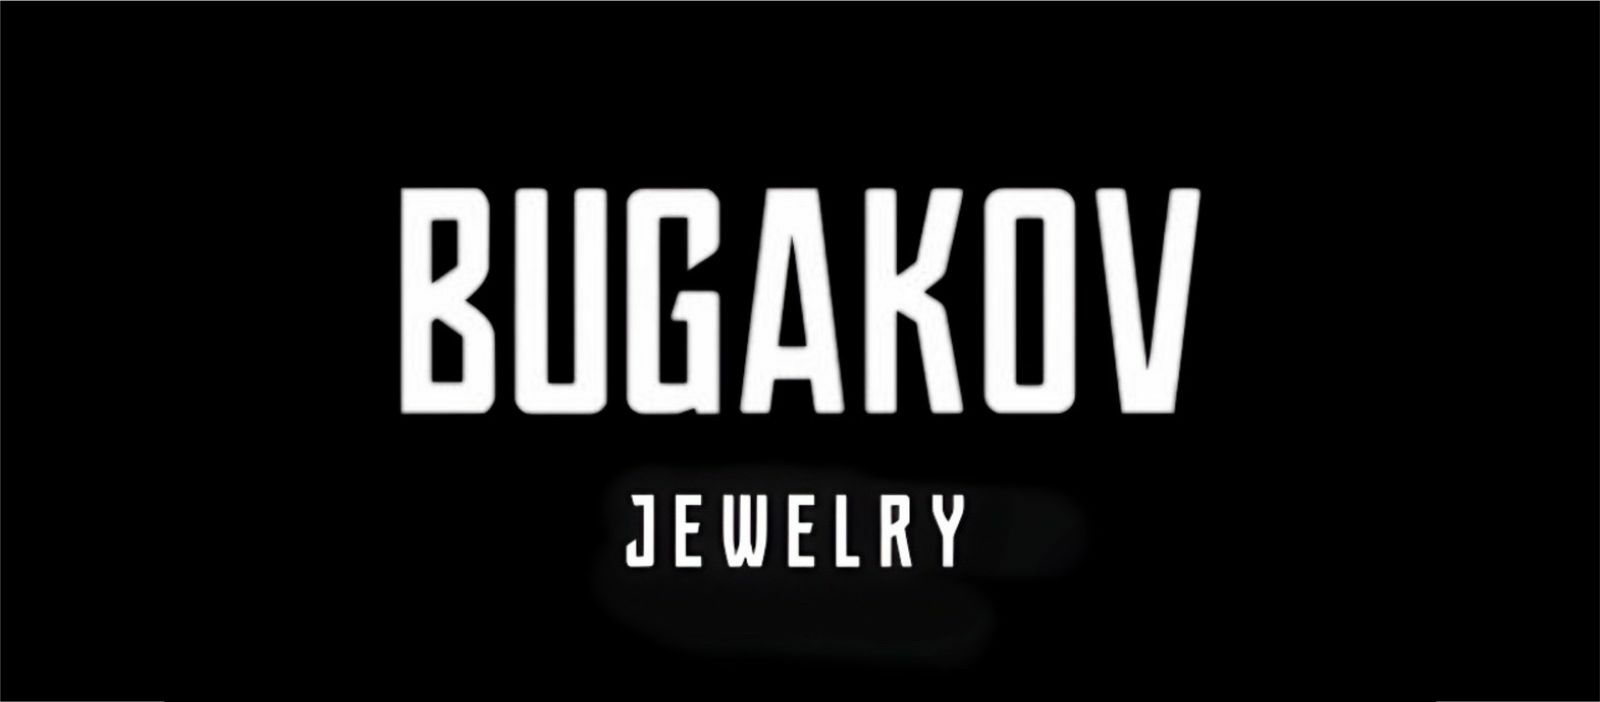 Gem Bugakov Jewelry